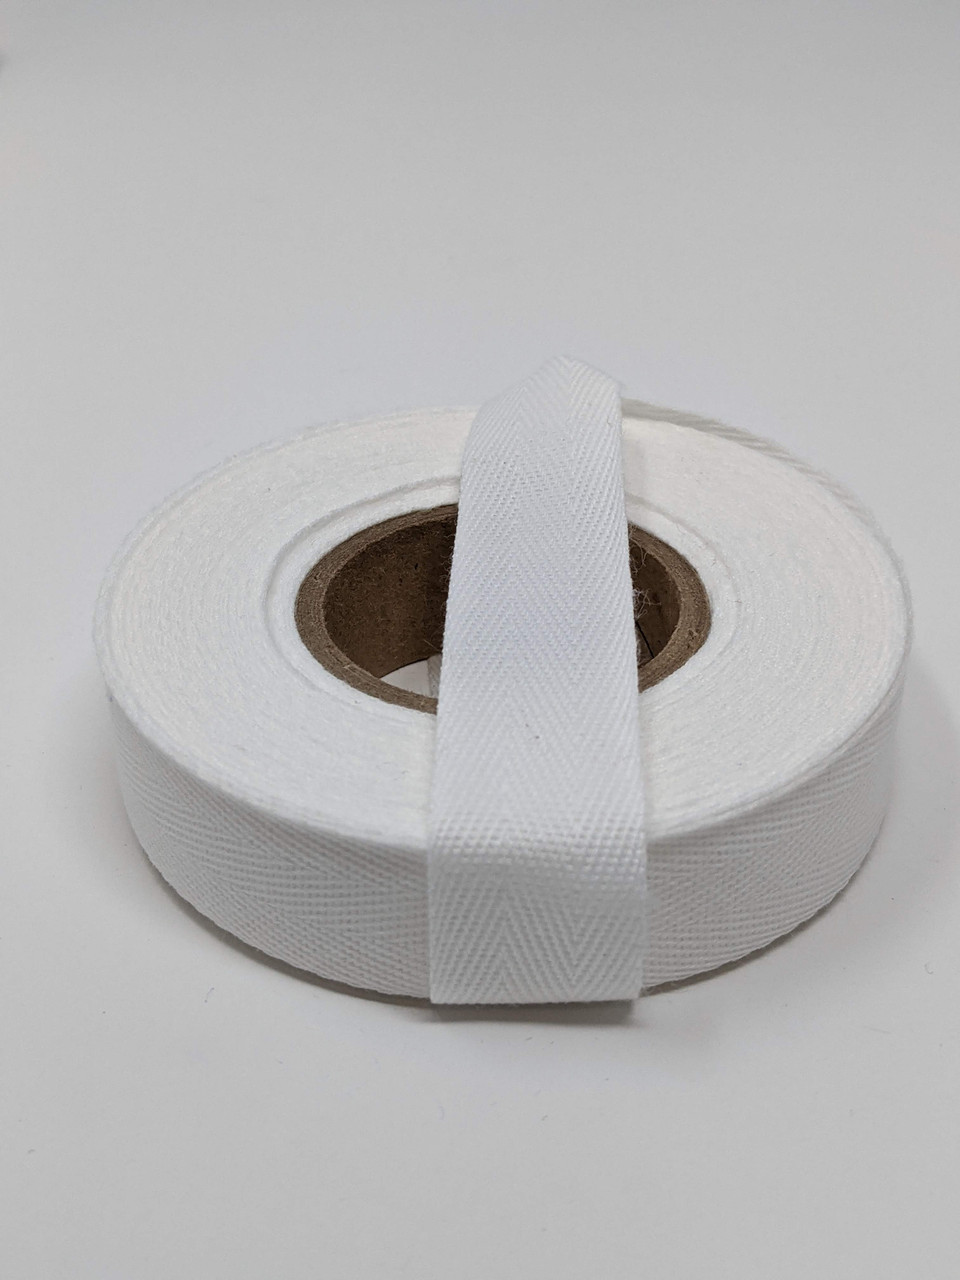 Cotton Twill Tape 3/4 White, 10 yard roll